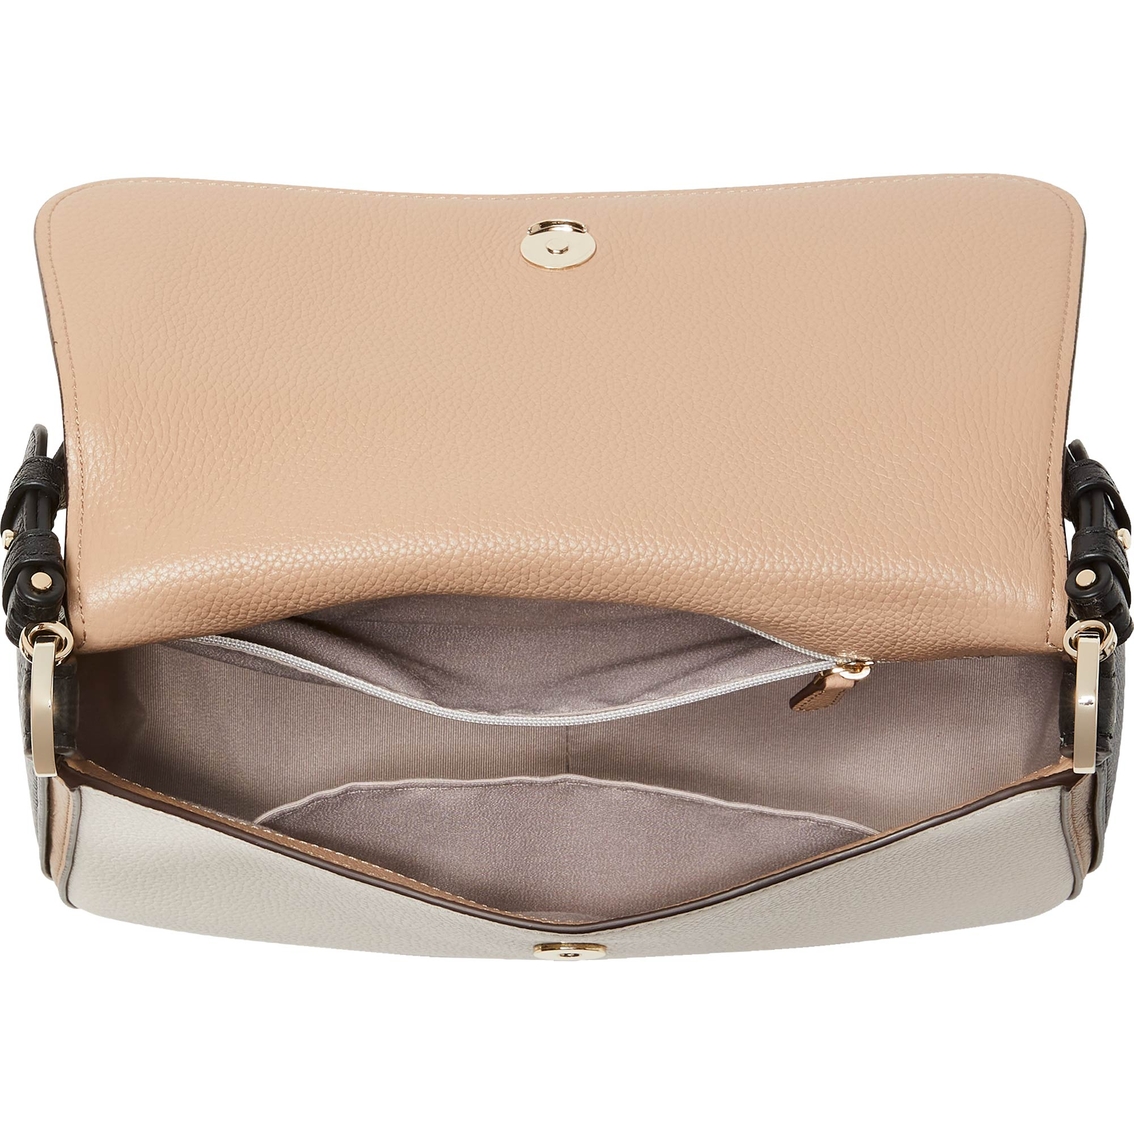 Kate Spade Hudson Colorblock Medium Convertible Flap Shoulder Bag - Image 3 of 5